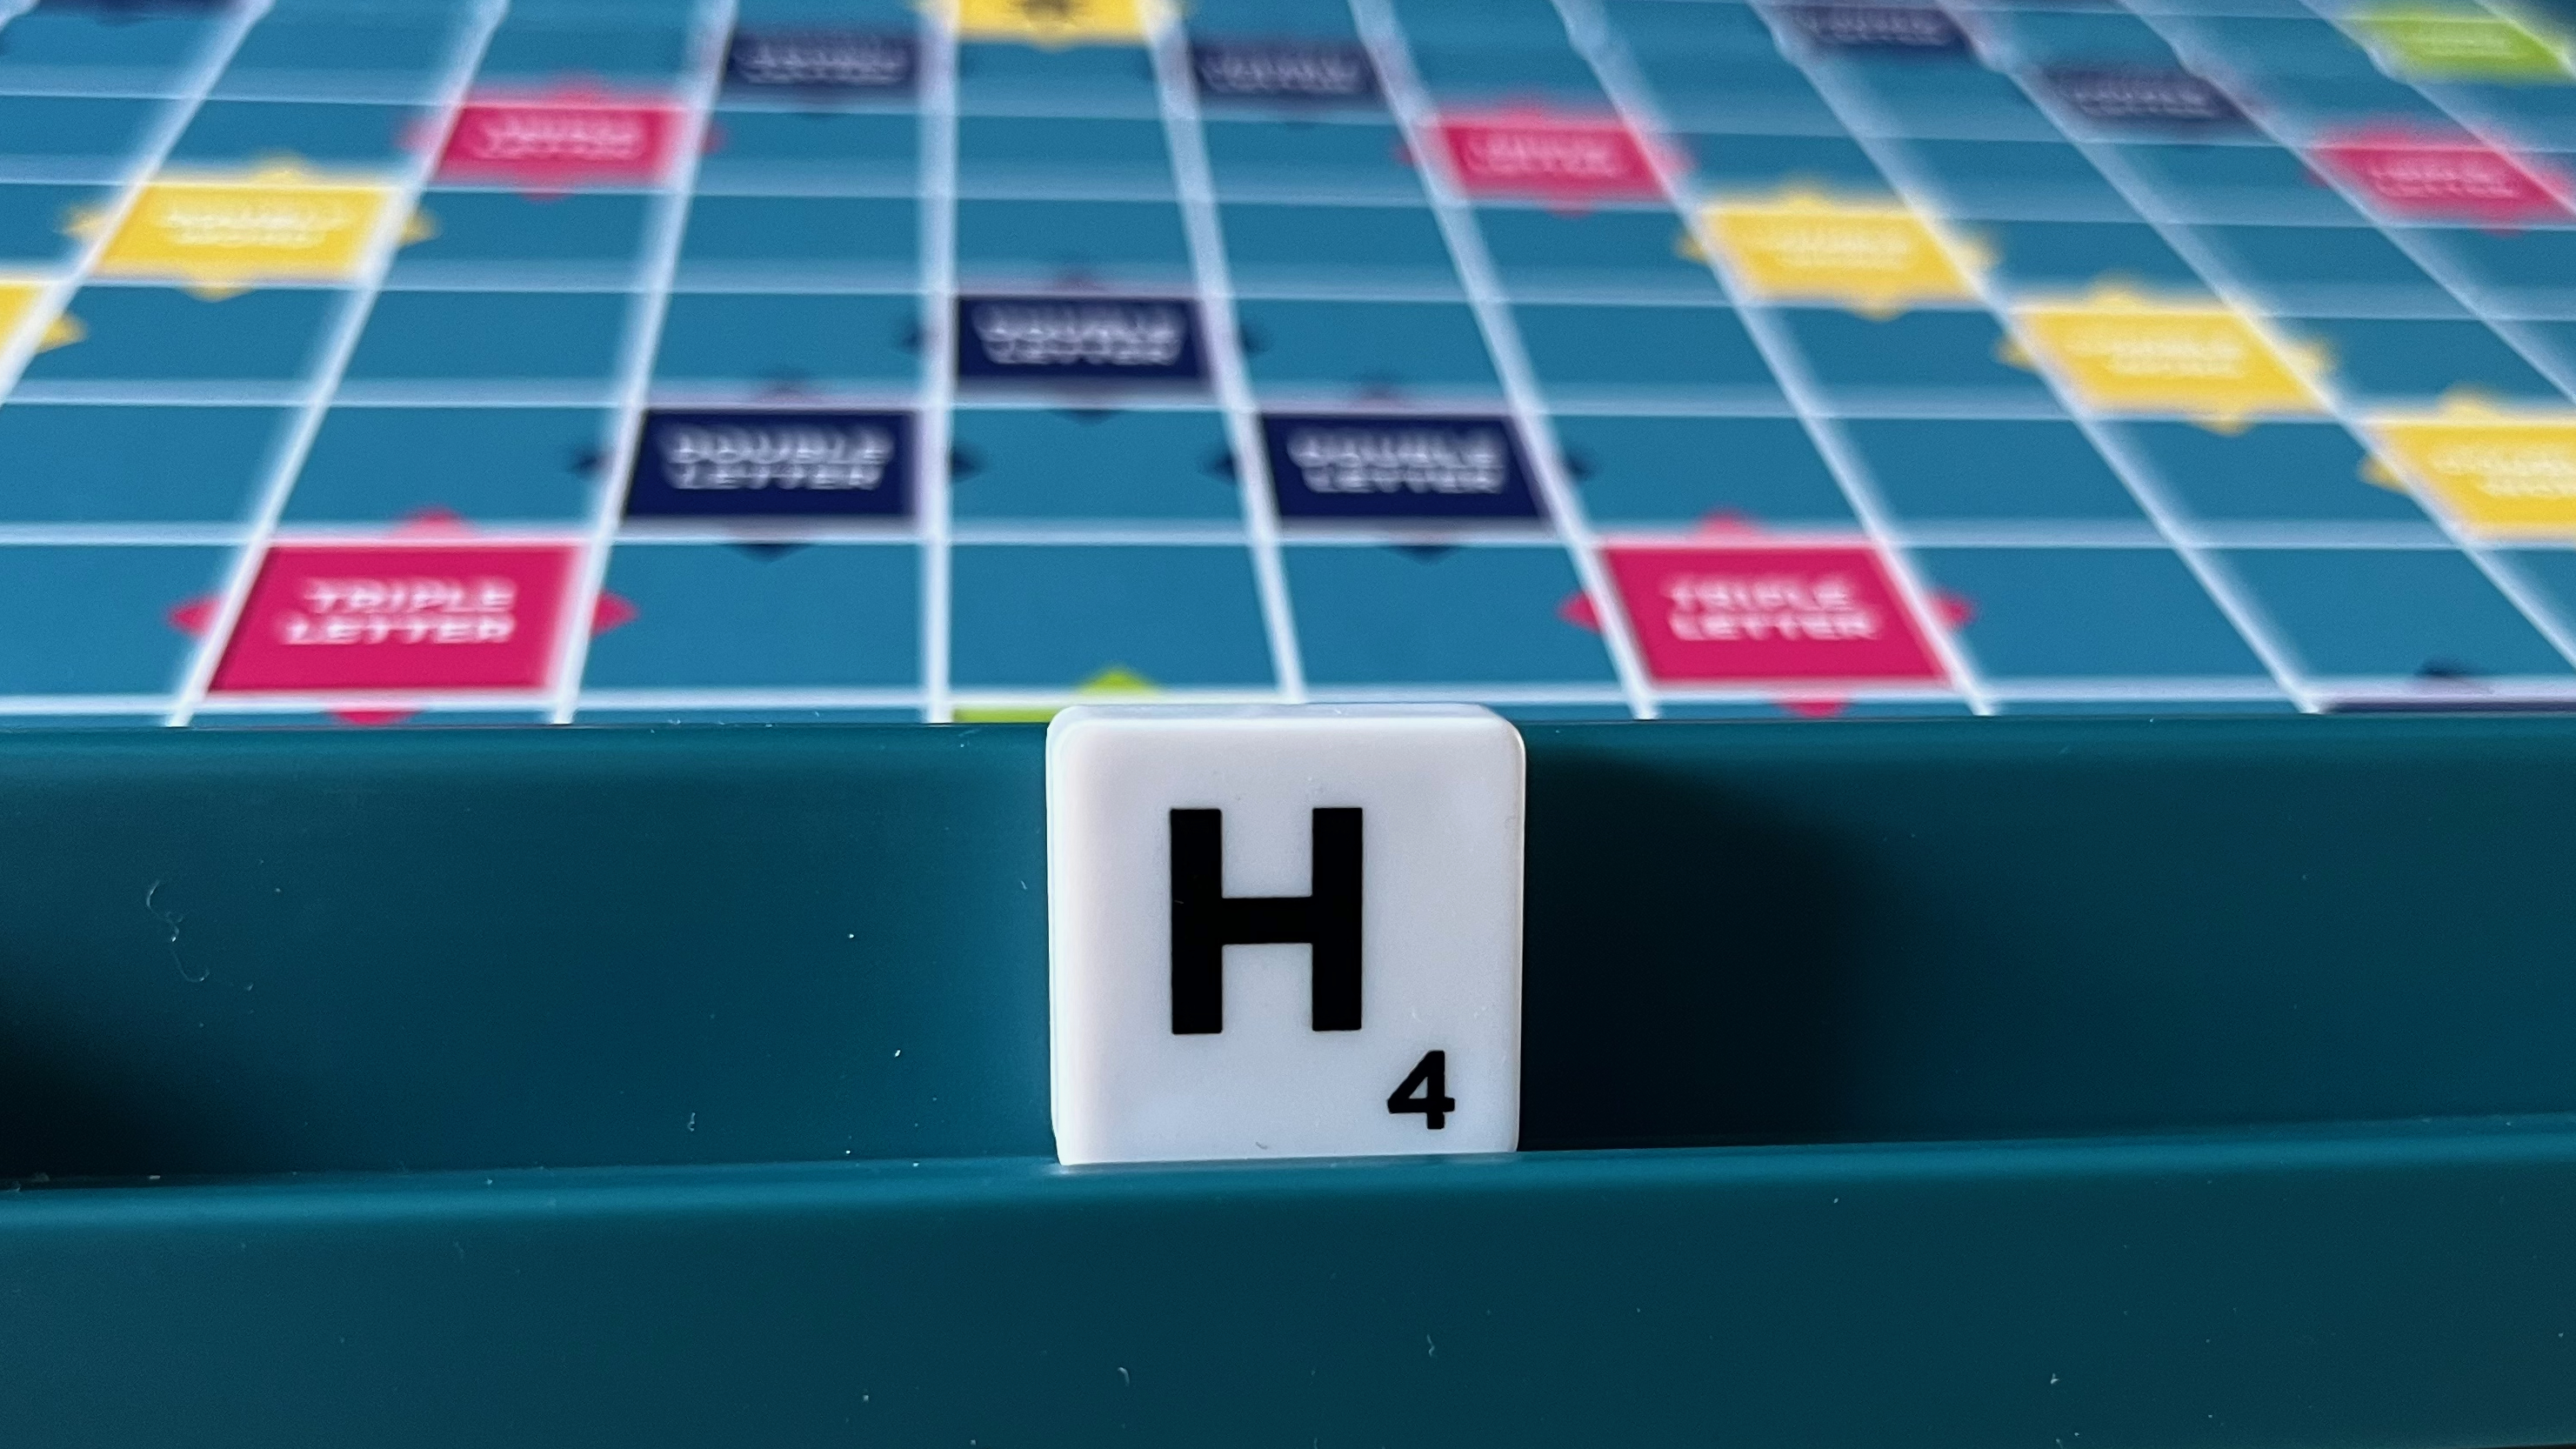 The letter H tile in Scrabble